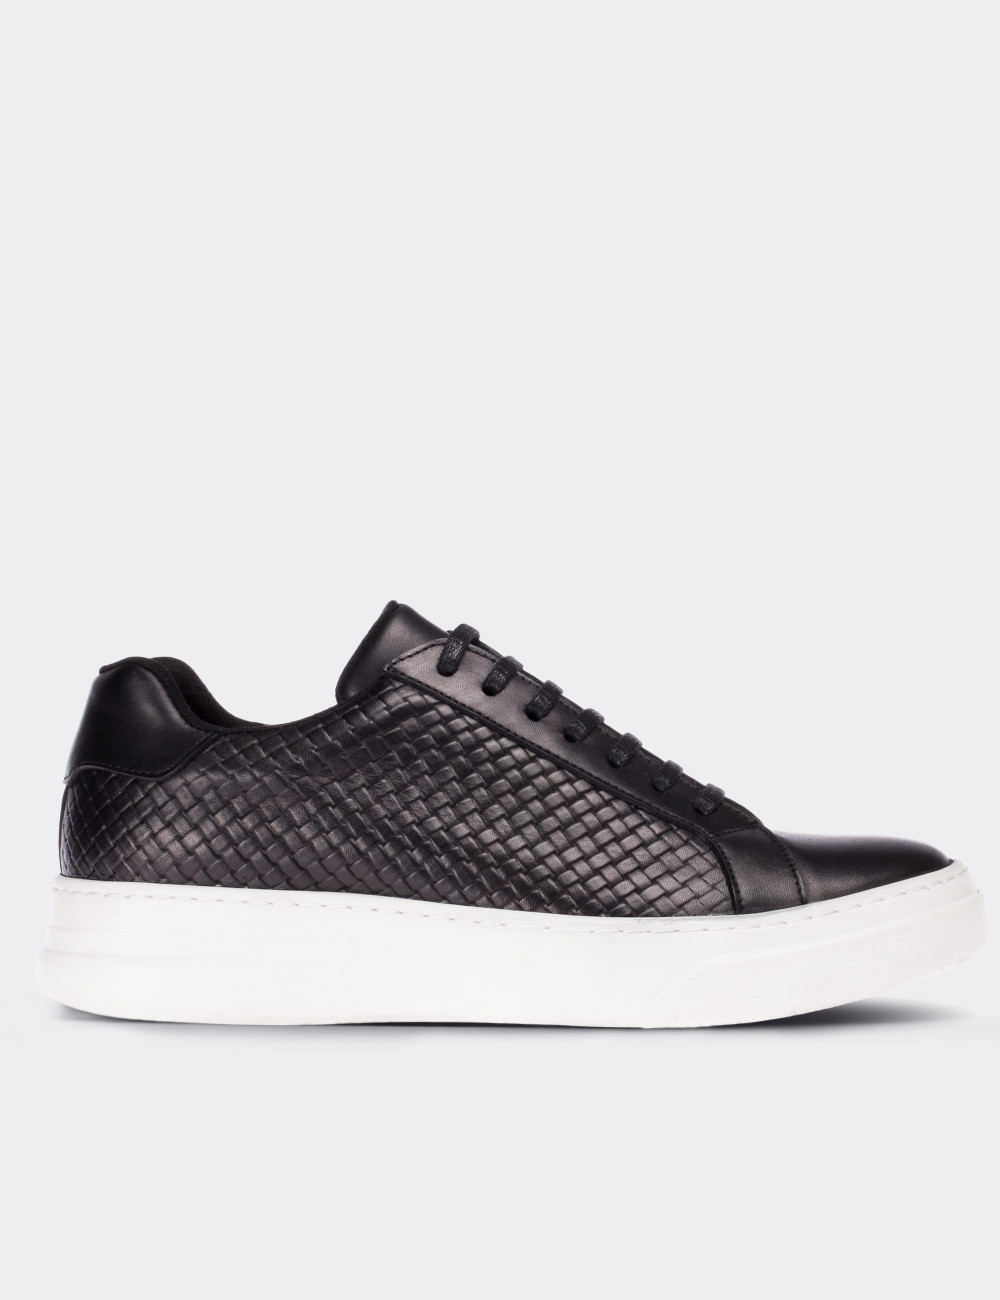 Black  Leather Sneakers - 01737MSYHP01